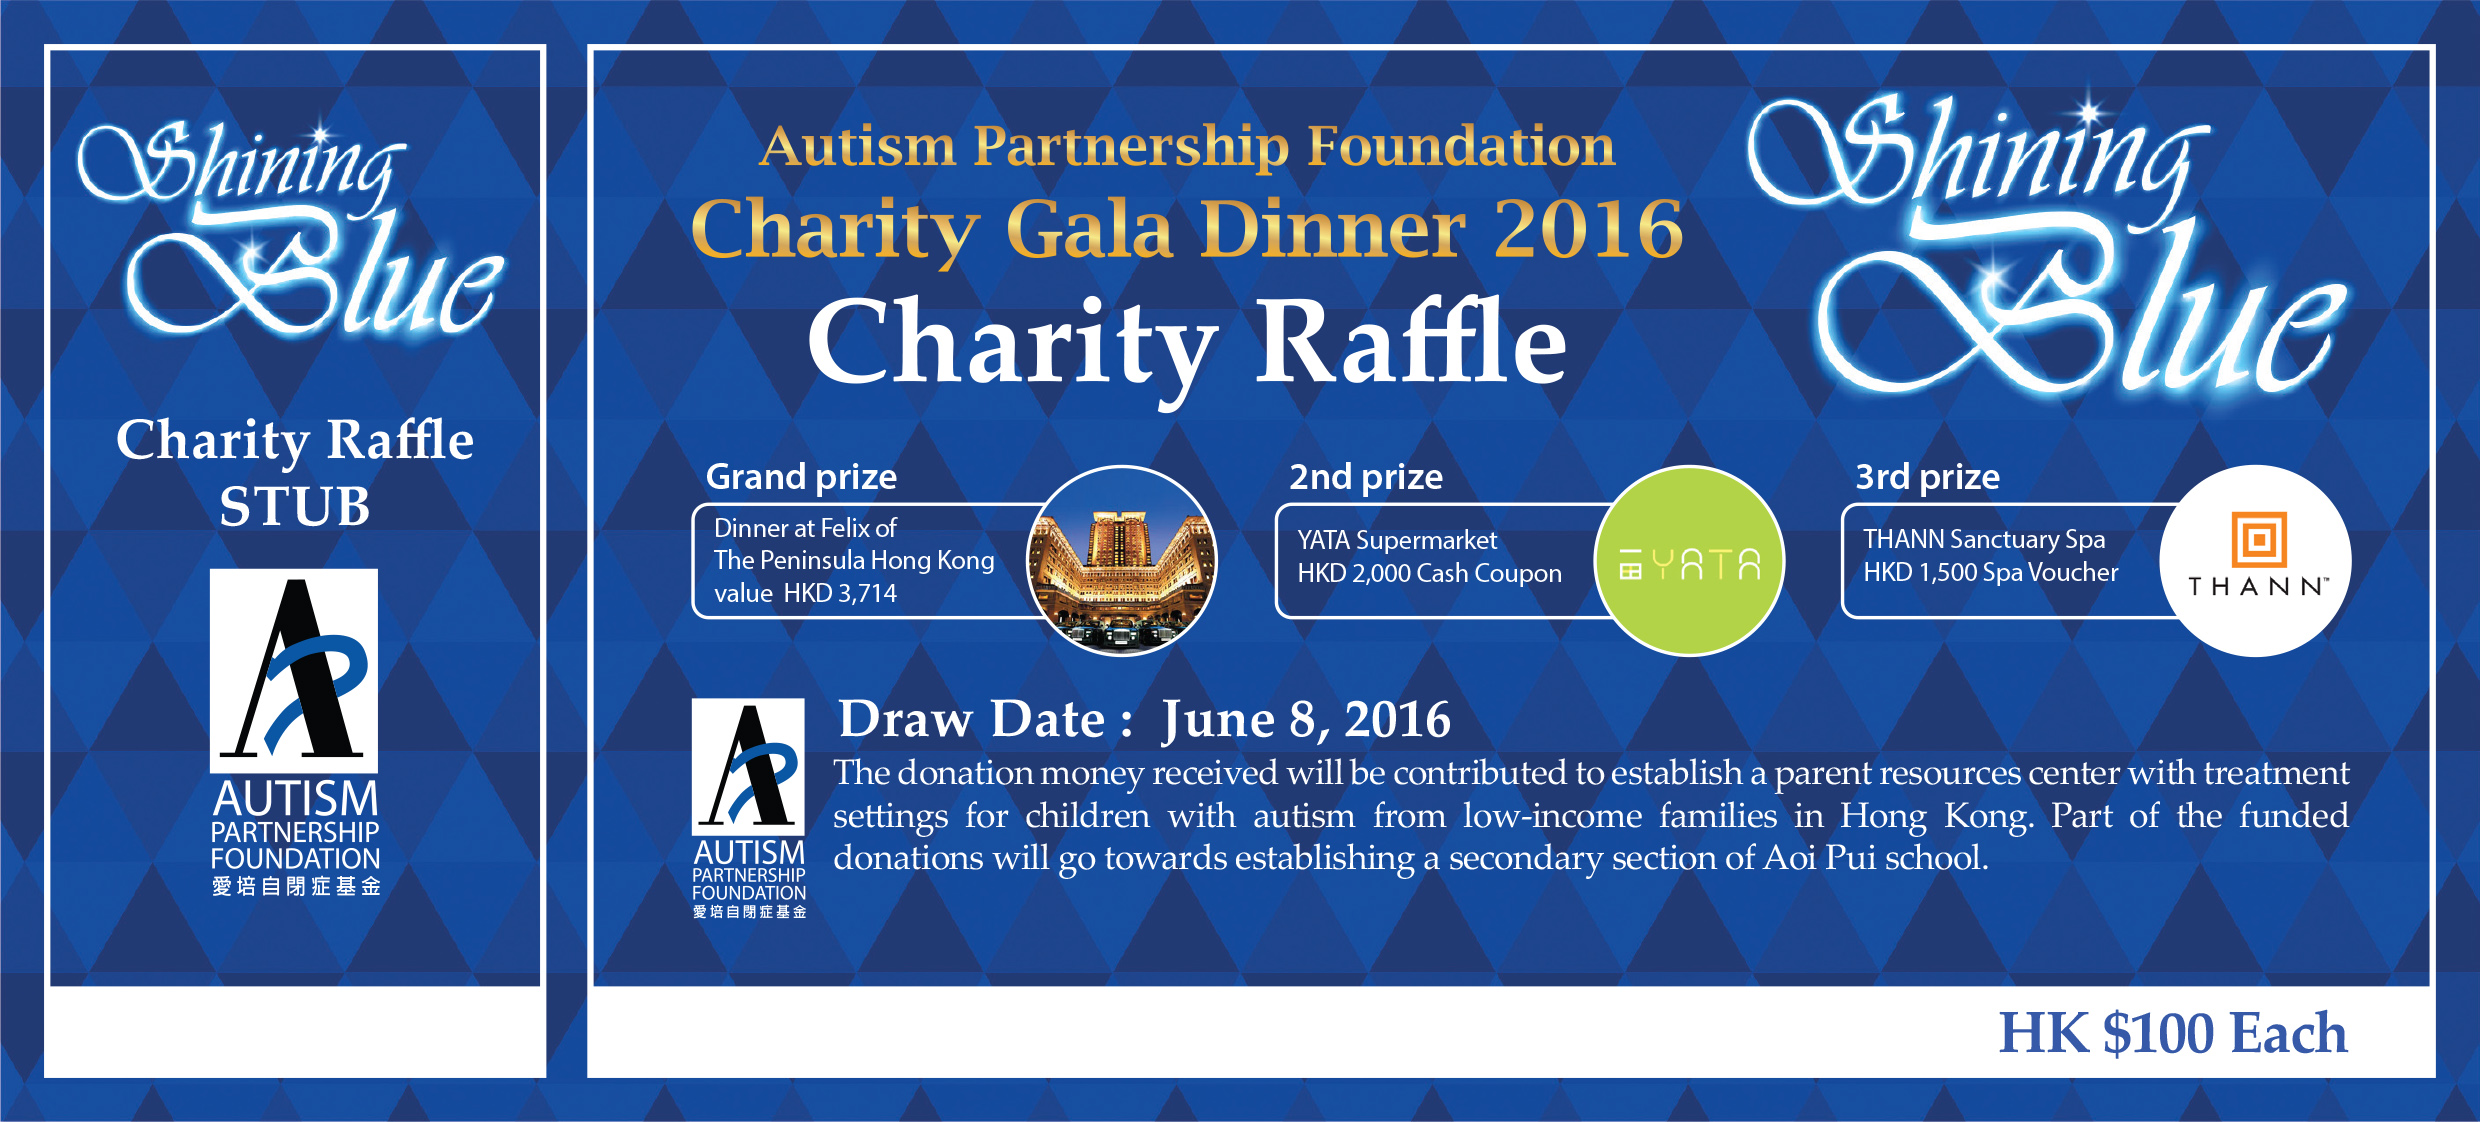 Shining Blue Charity Gala Dinner 2016 Autism